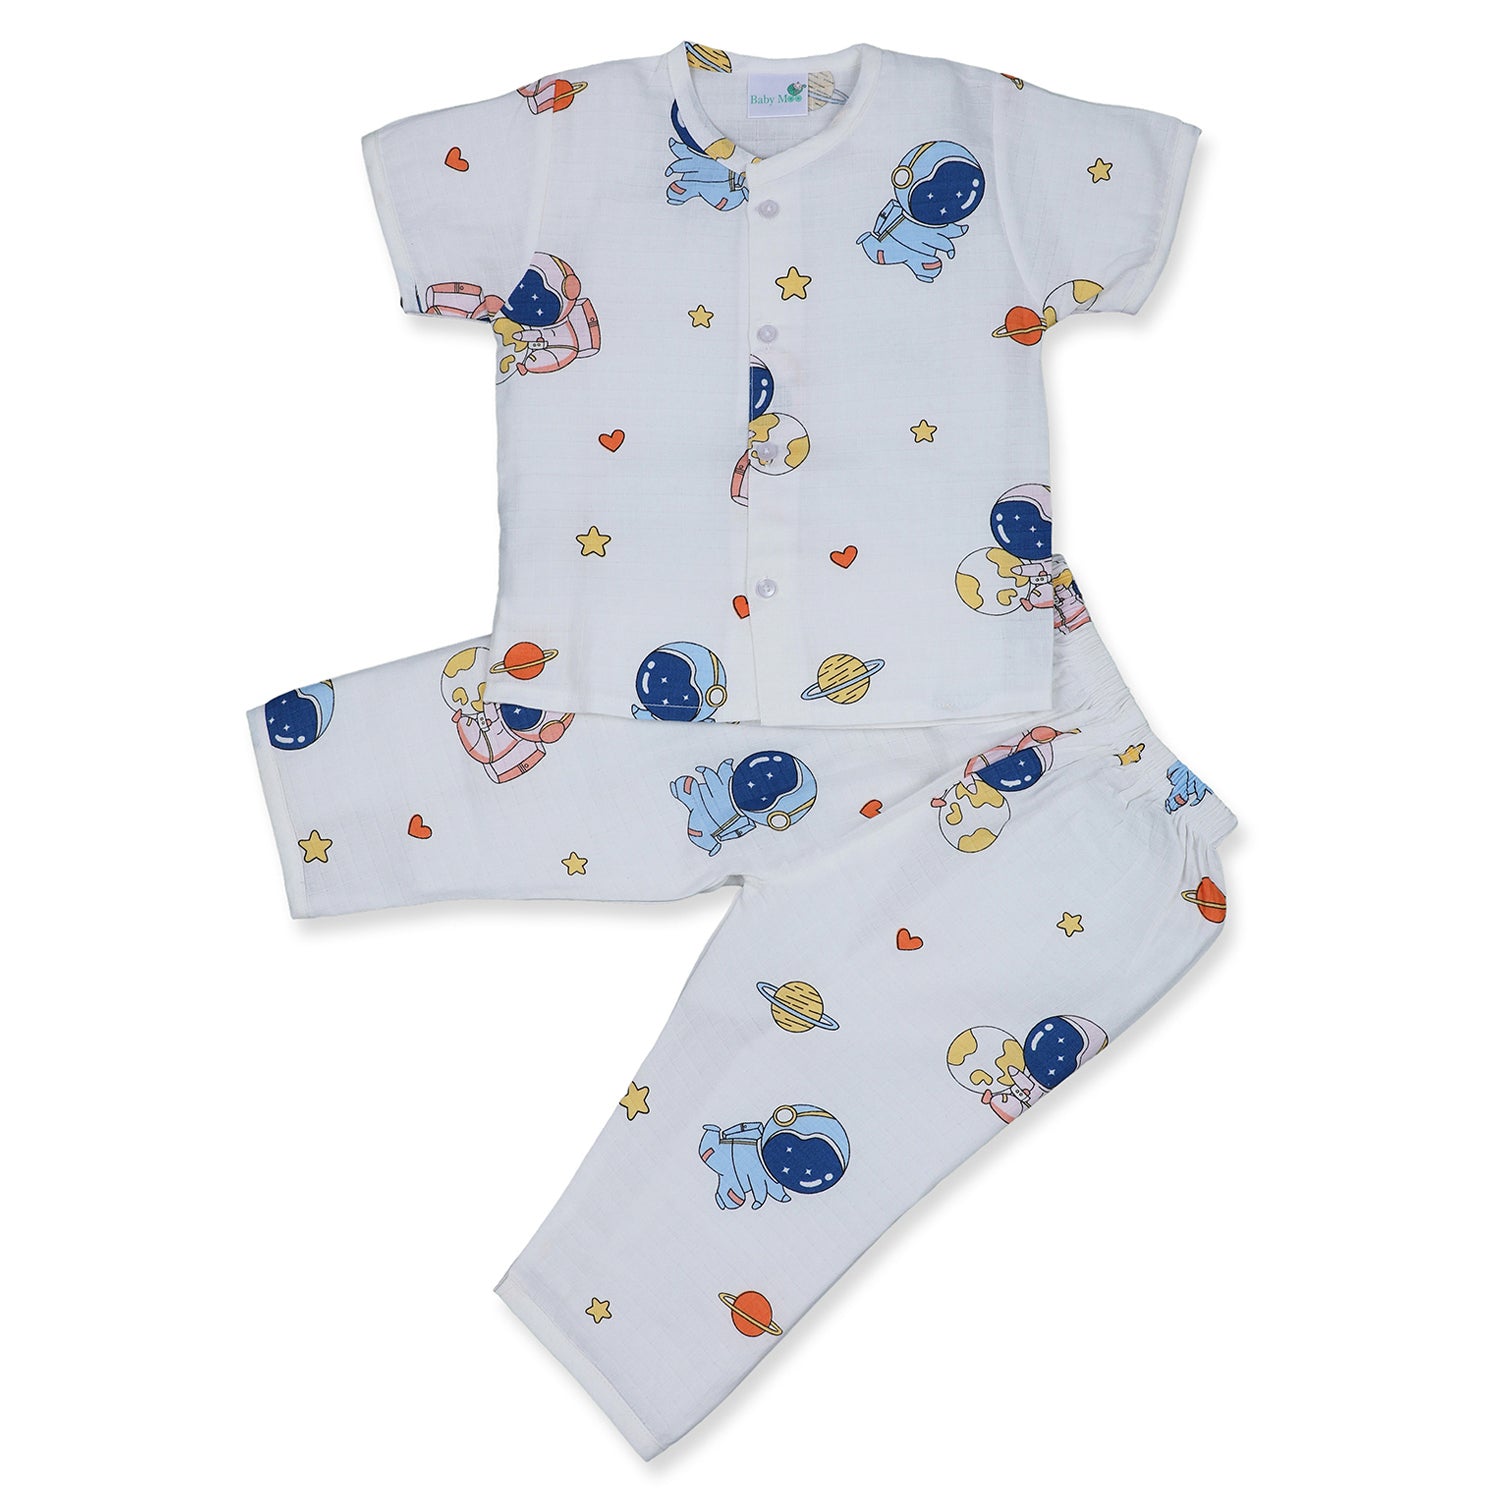 Baby Moo Astronaut In Space Shirt And Pyjama Night Suit - White - Baby Moo